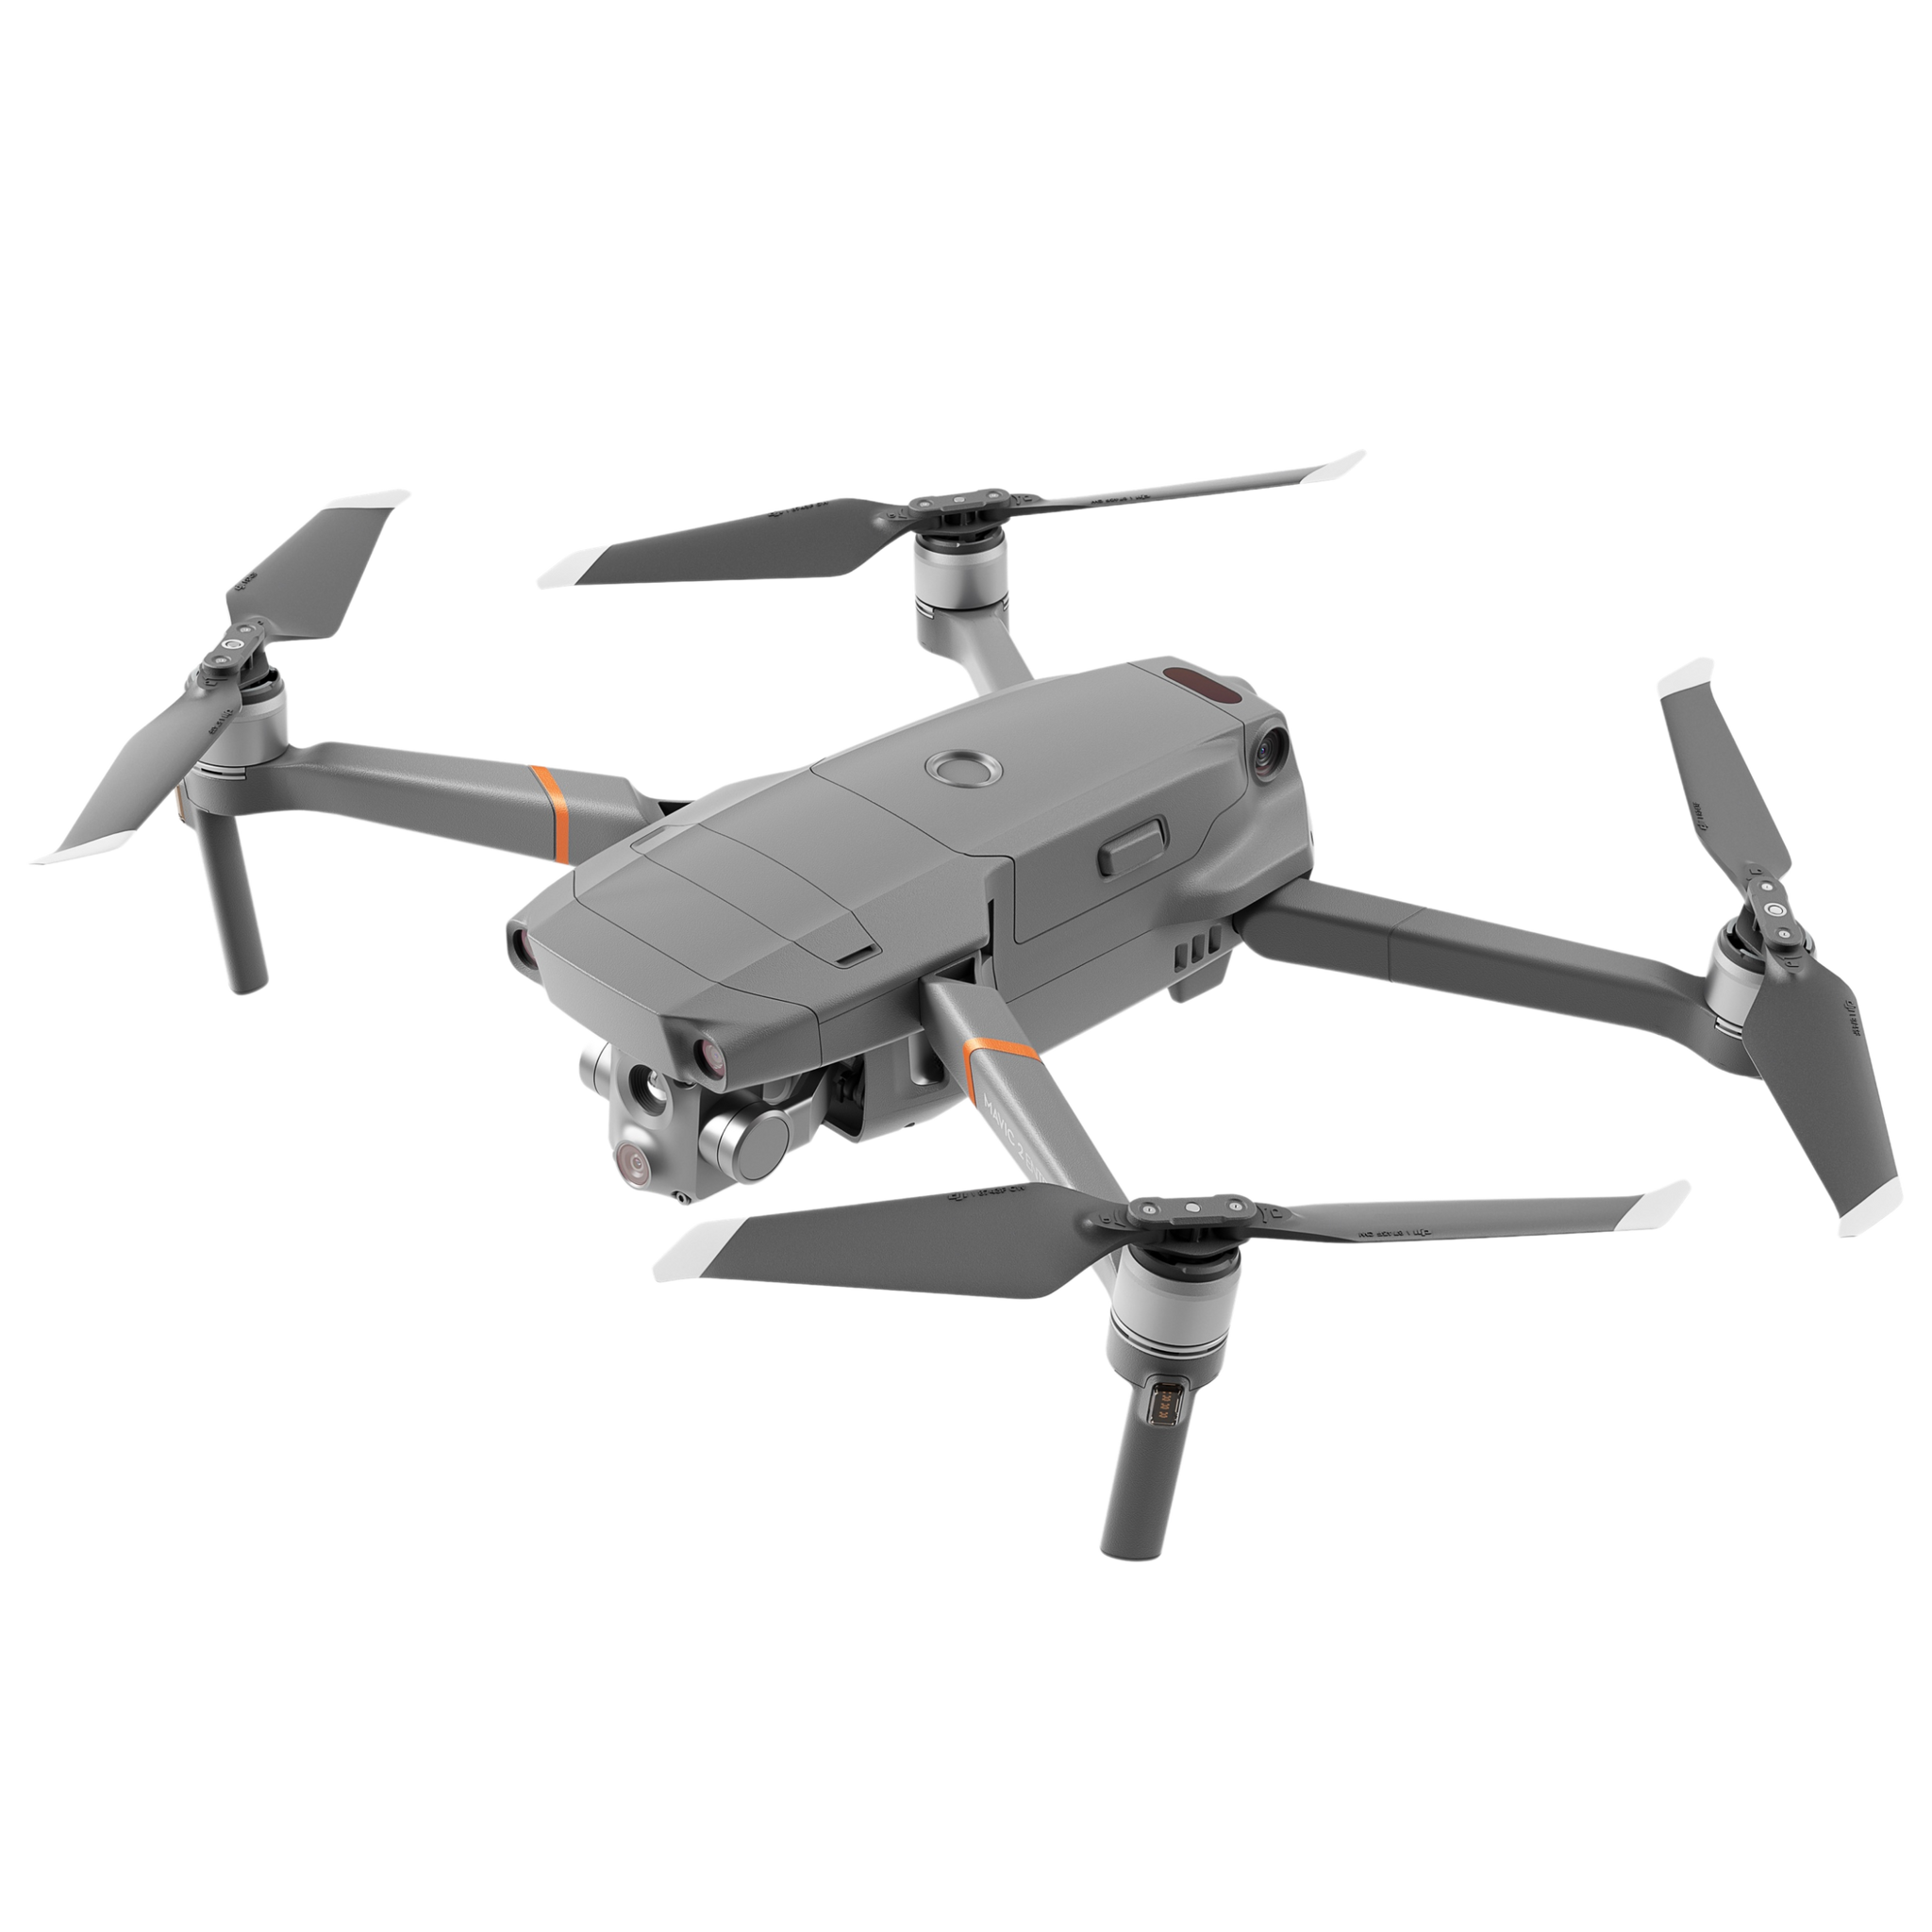 Mavic 2 Enterprise Advanced - Cloud City Drones